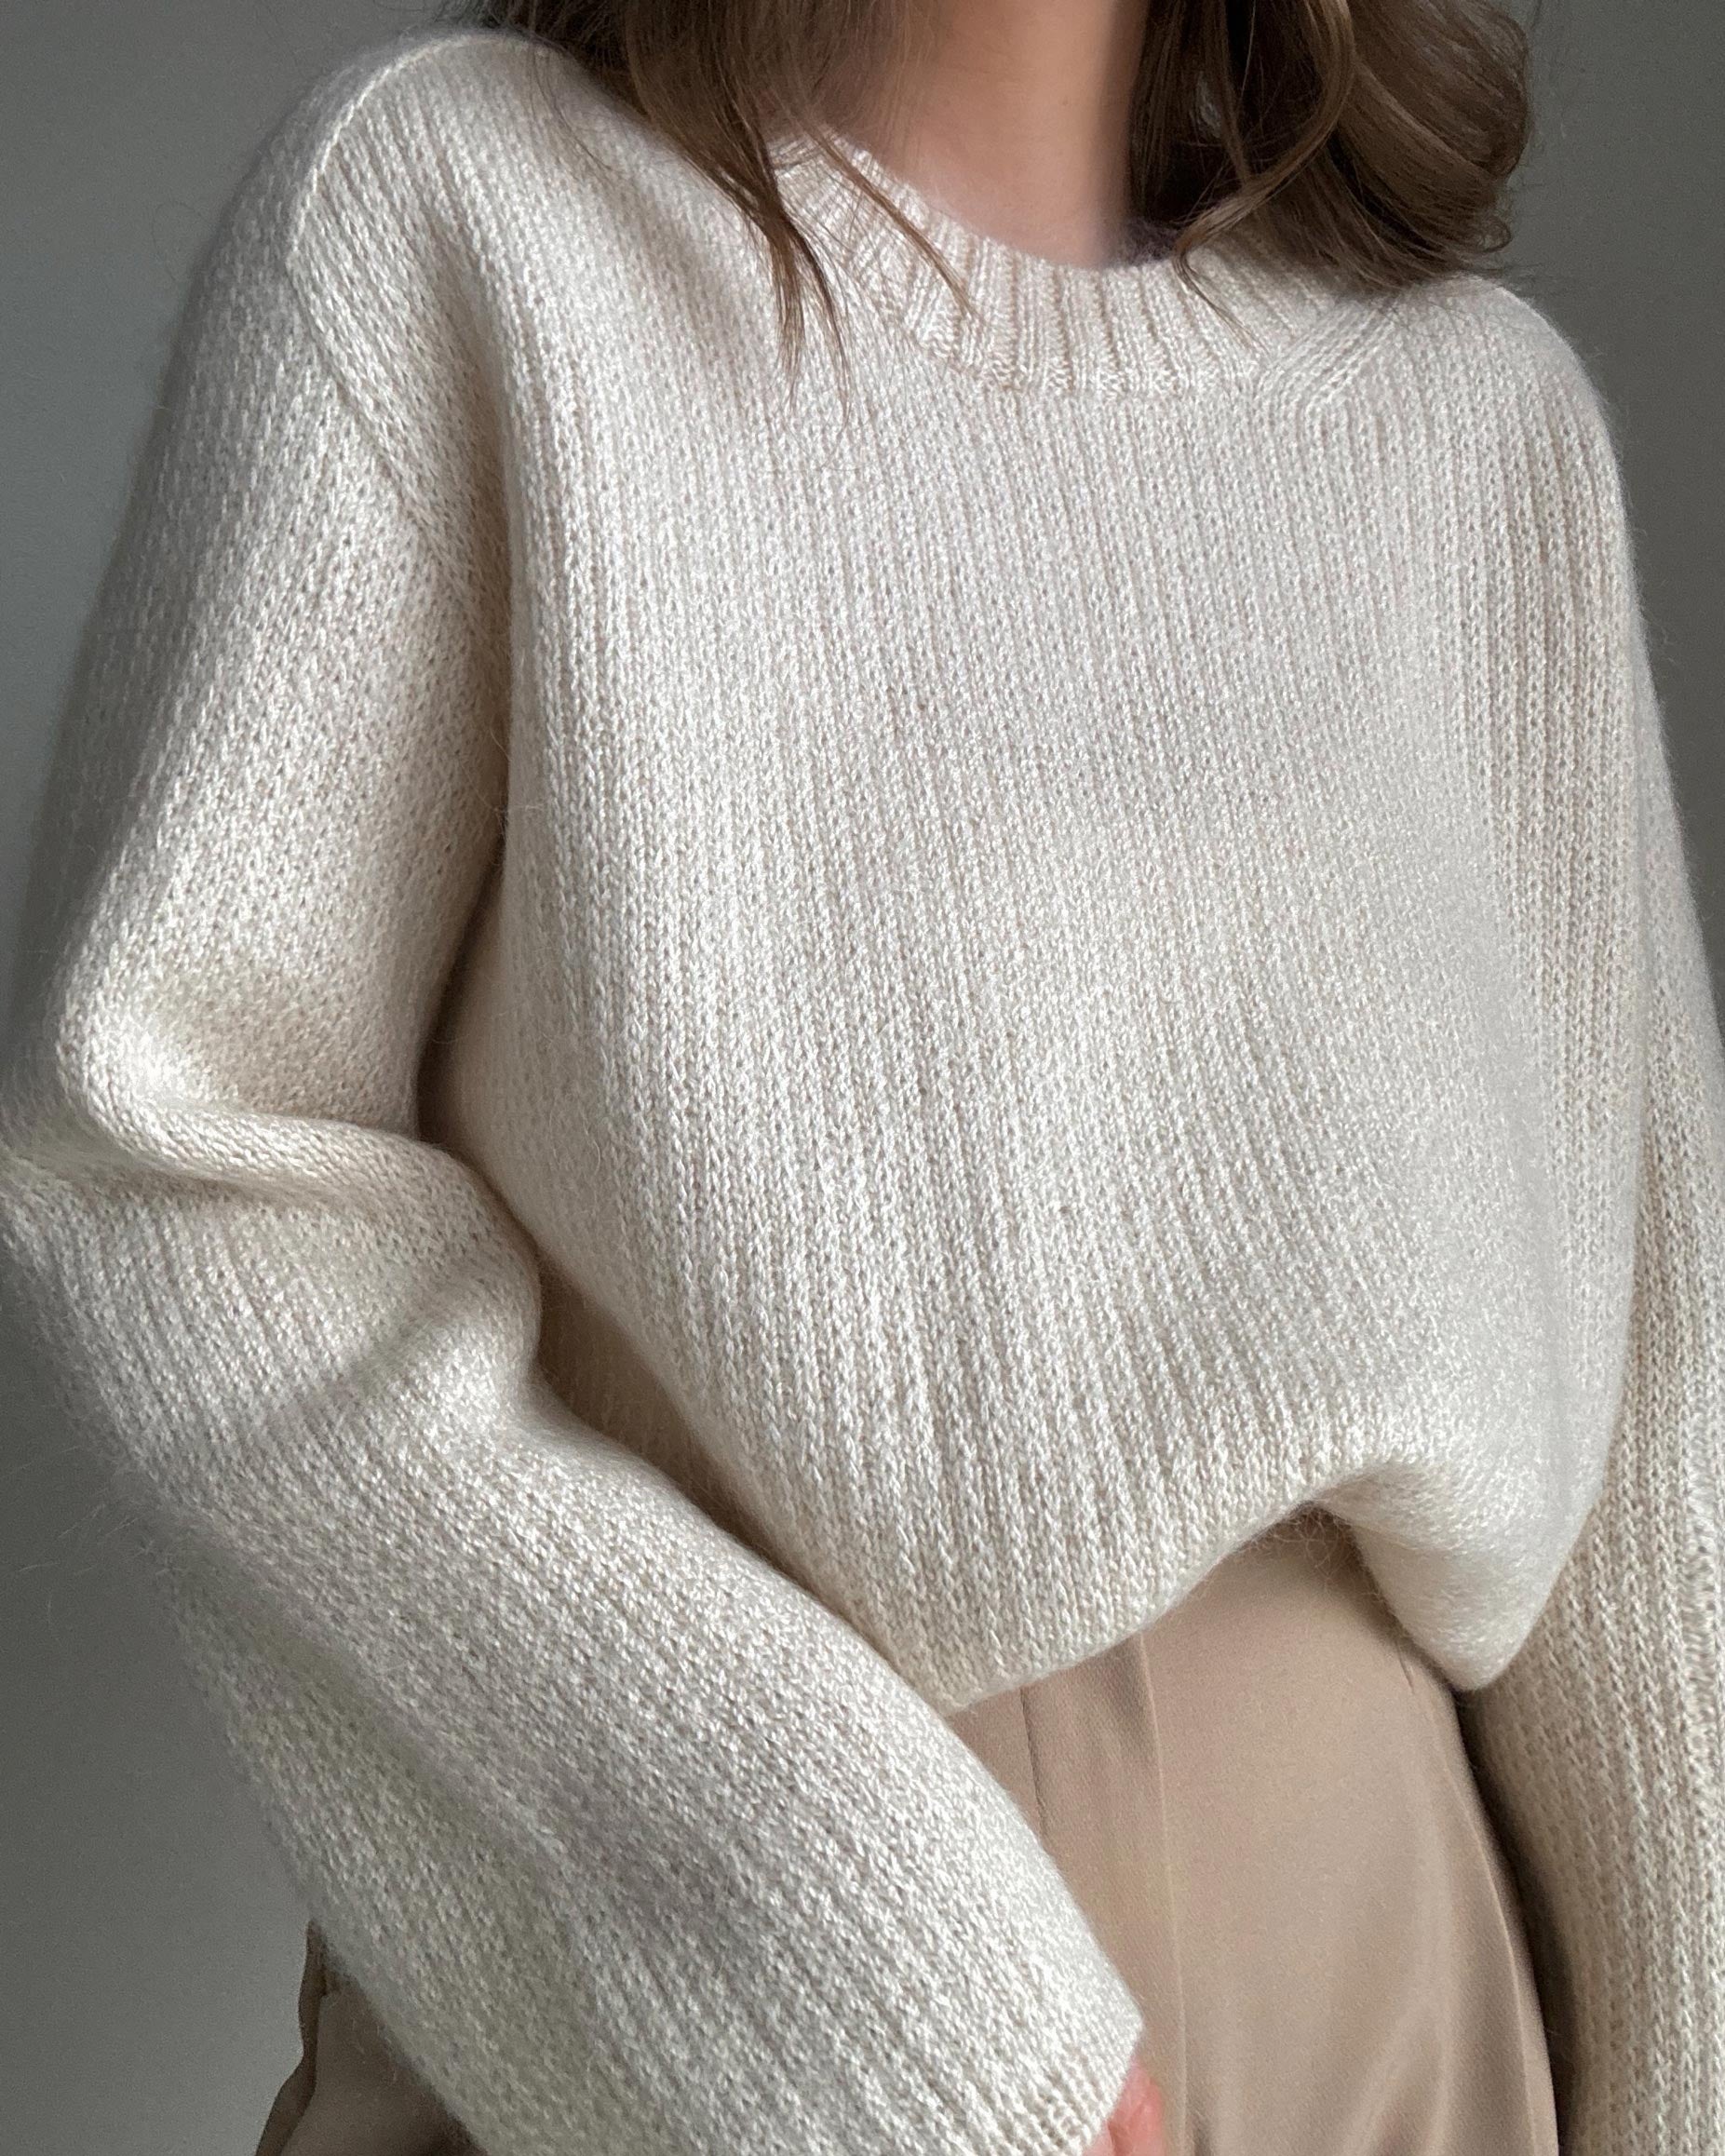 Feminine Chantal Sweater knitting blueprint, demonstrating sophisticated slip stitch details.